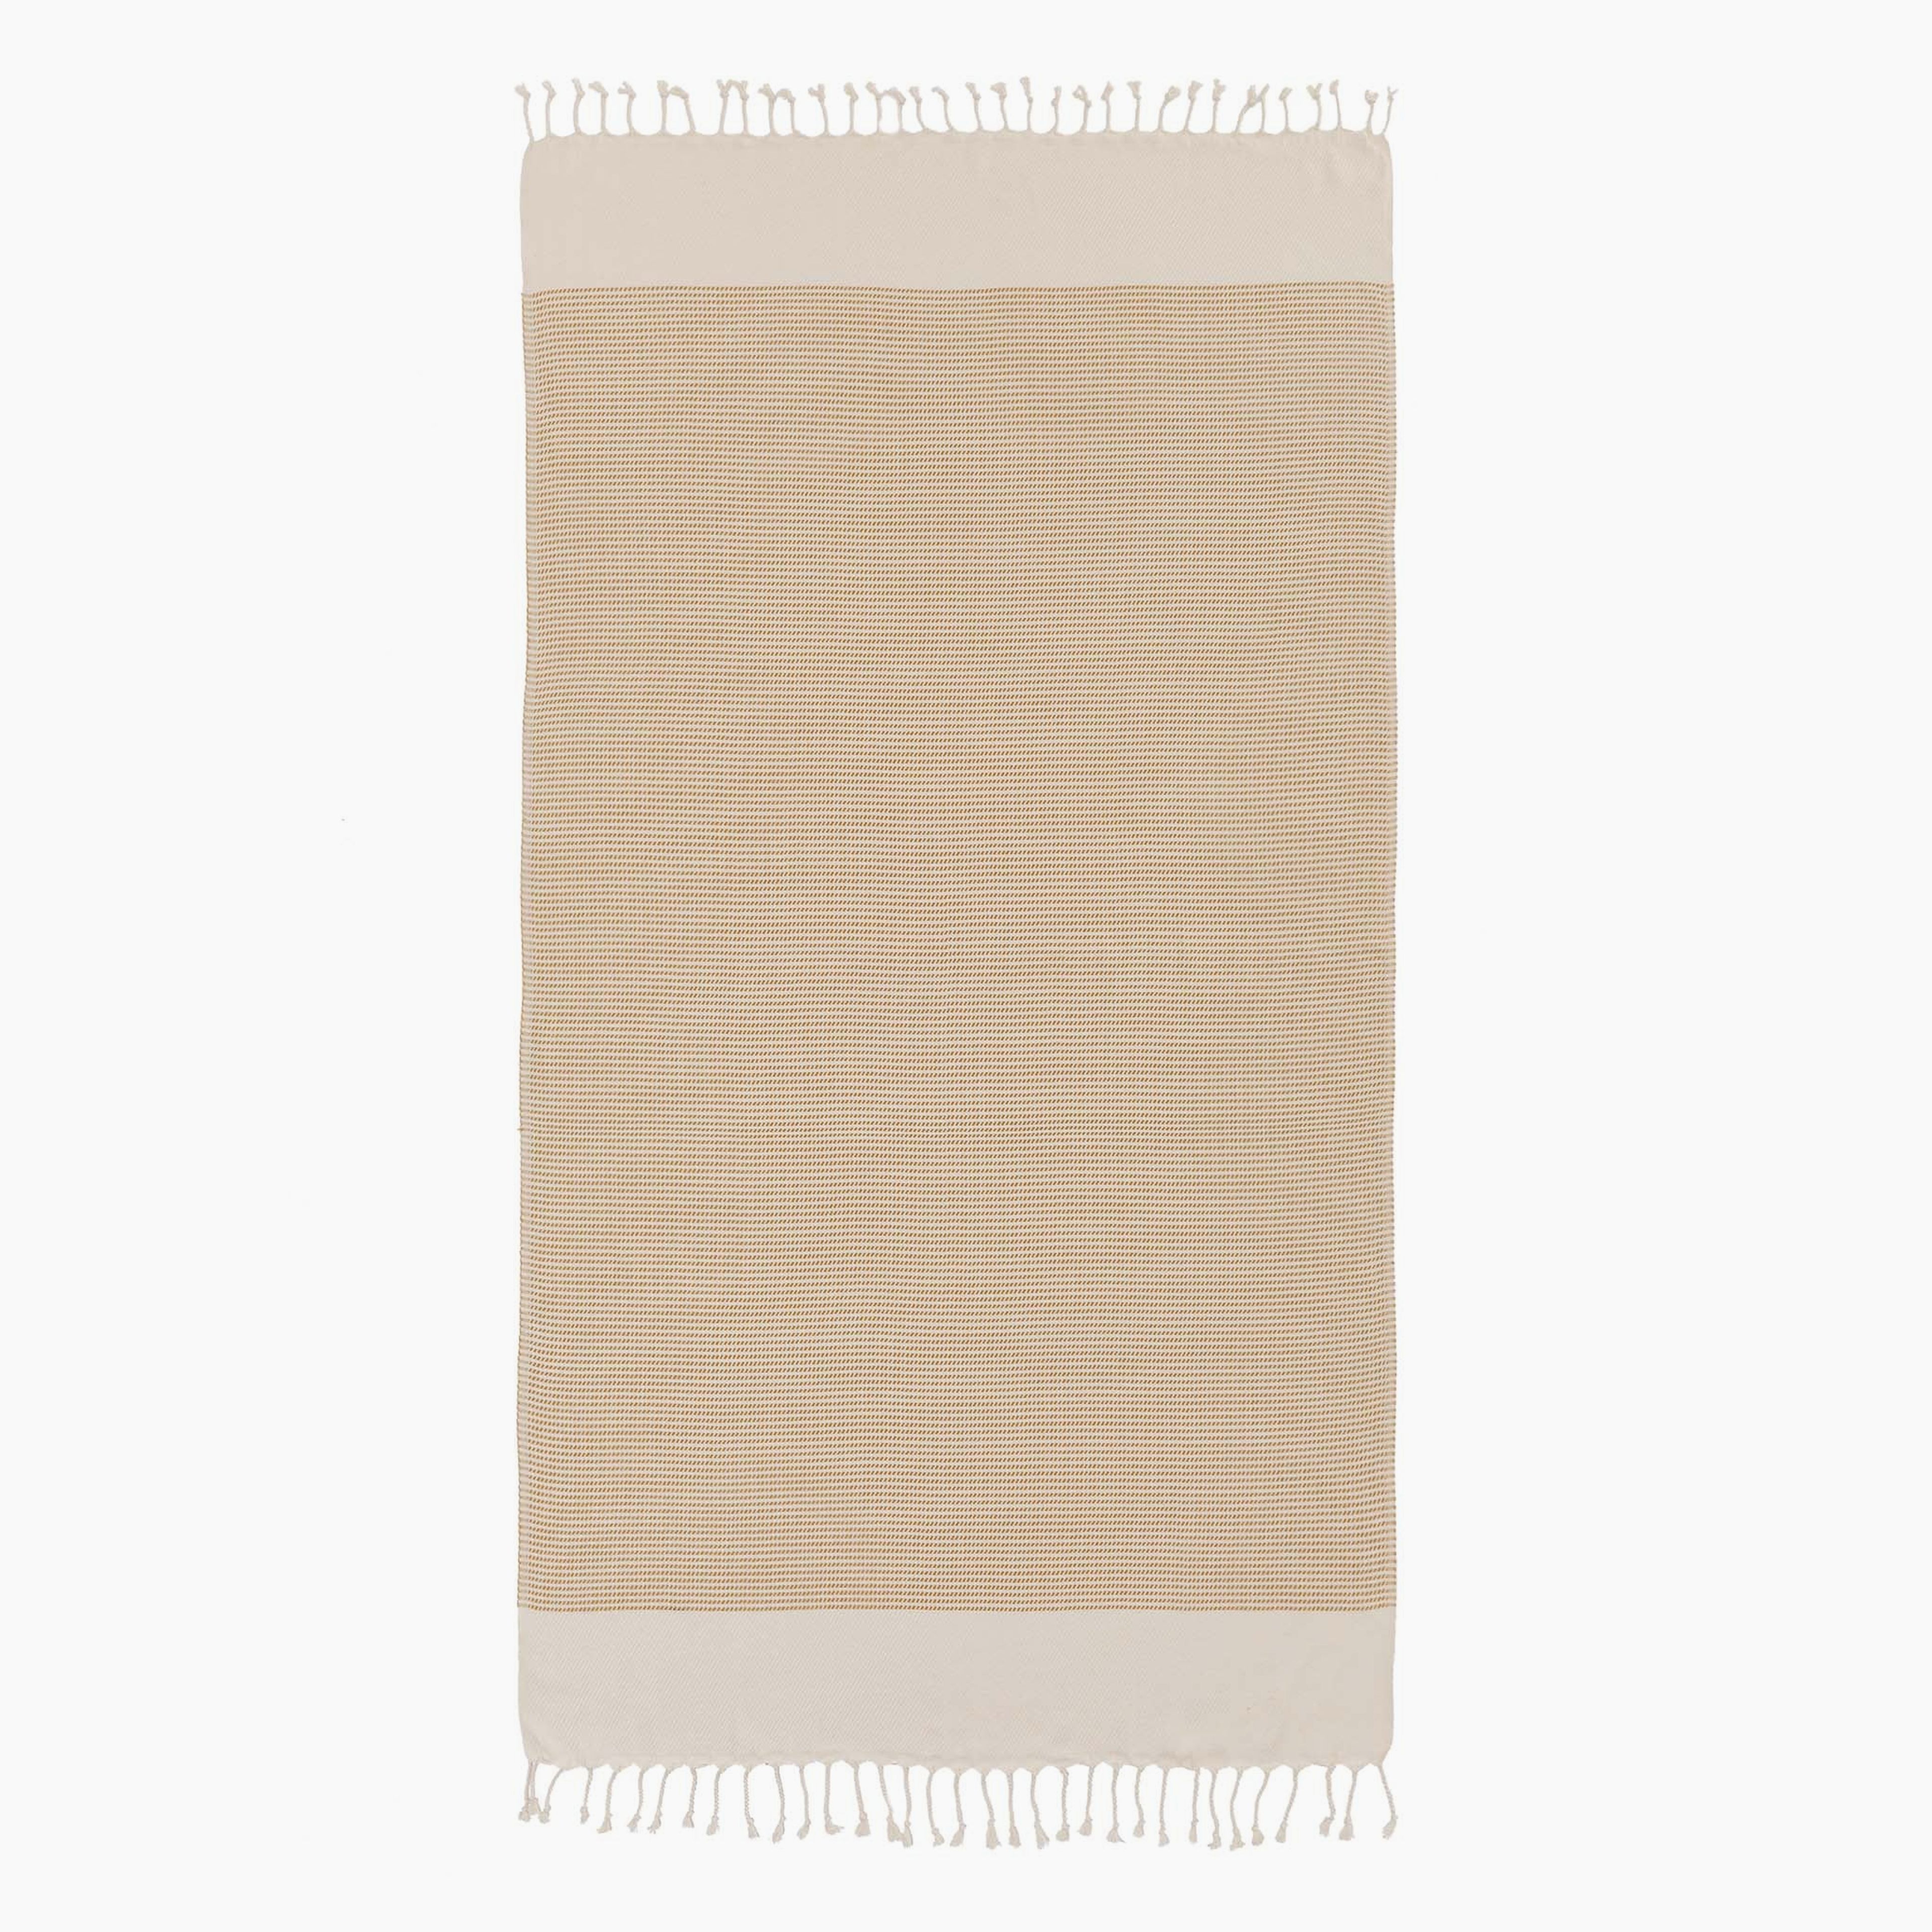 Bolu Hammam Towel [Mustard/Natural white]